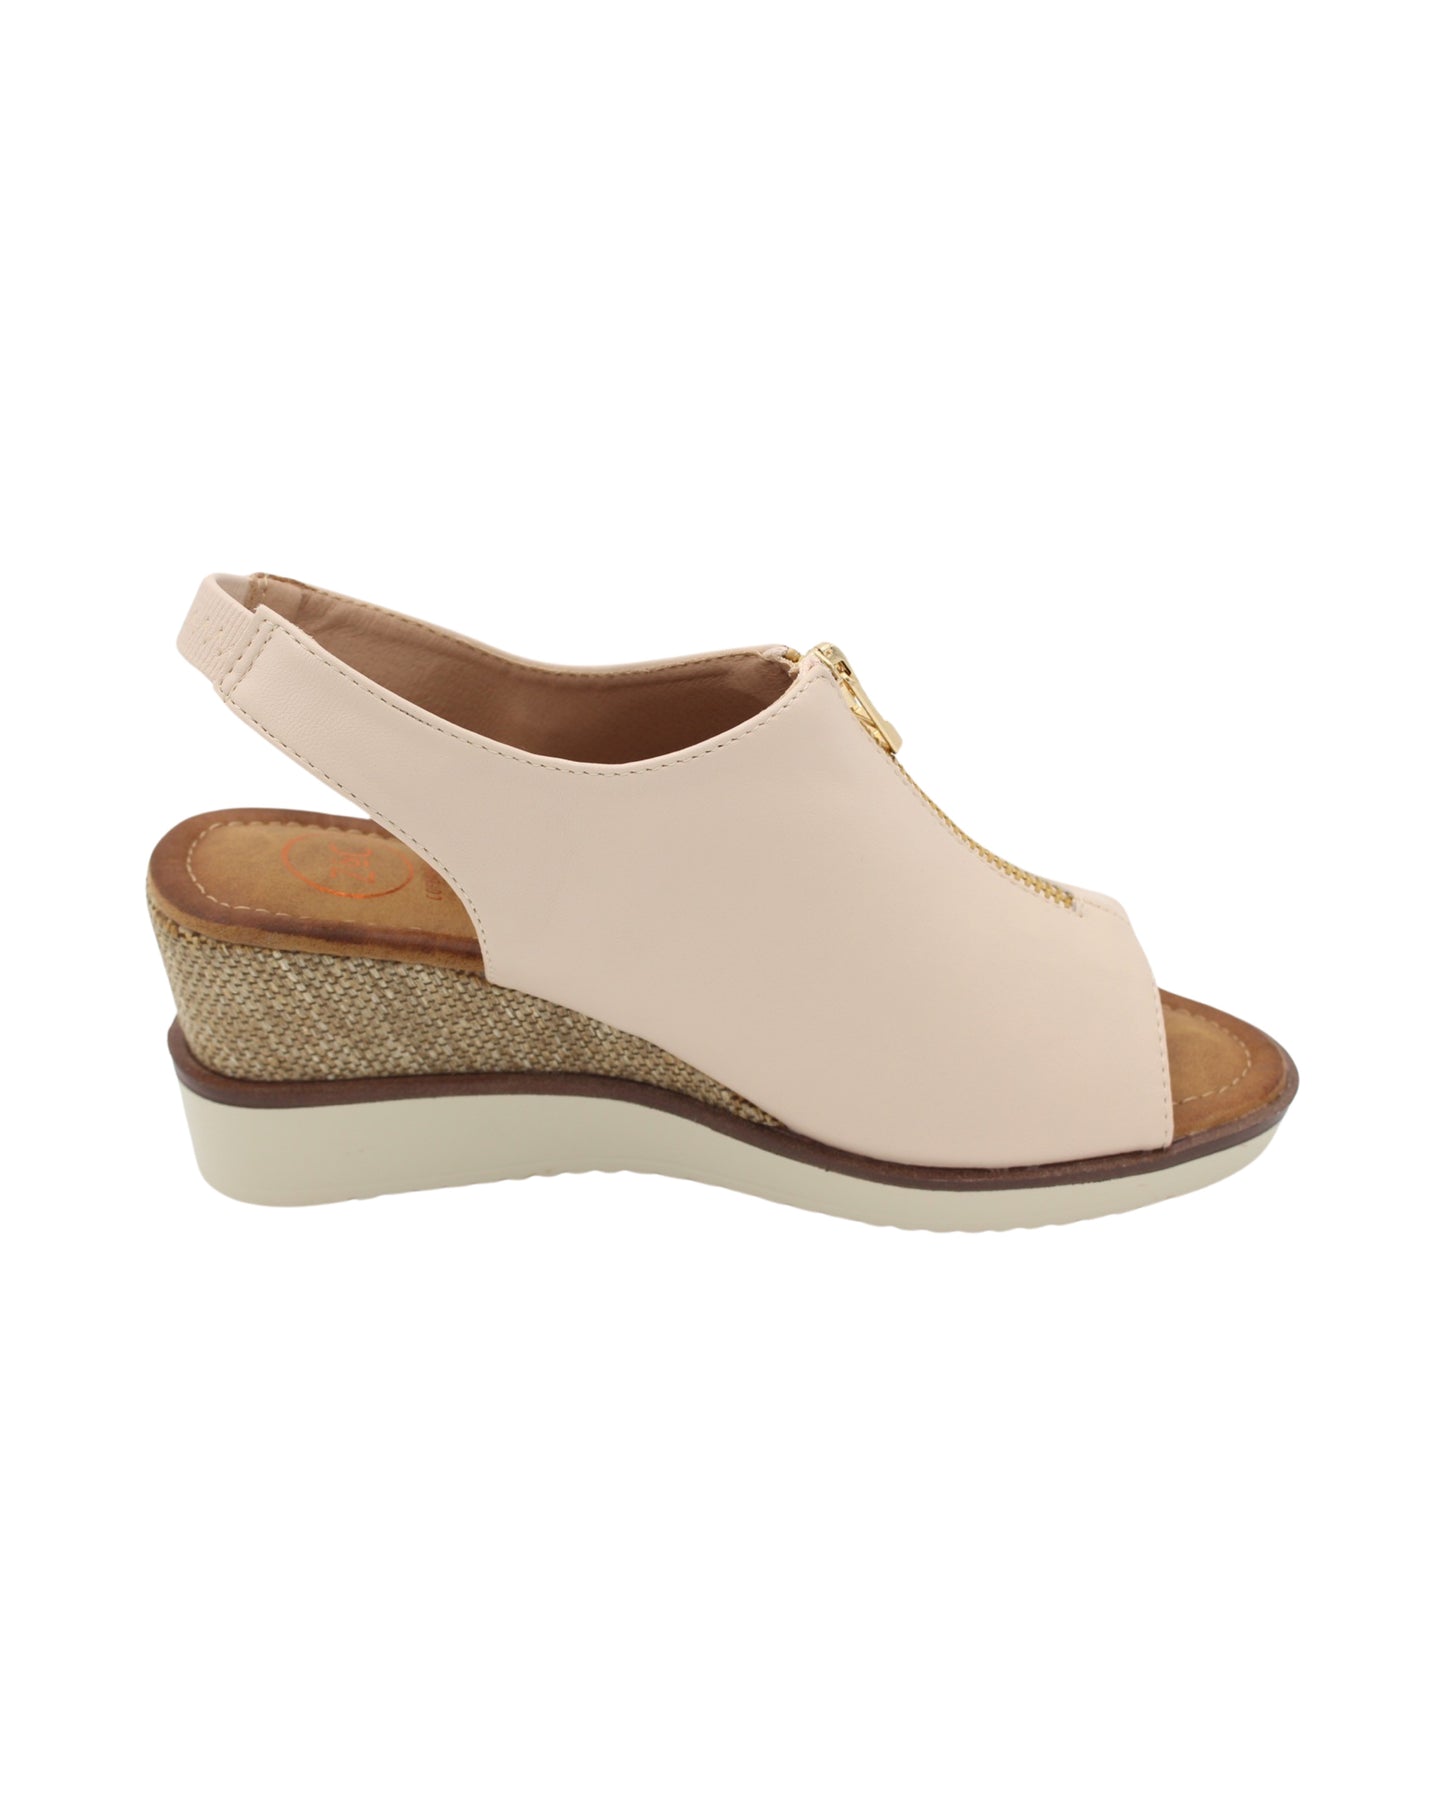 Zanni - Ladies Shoes Sandals Oatmeal (2093)